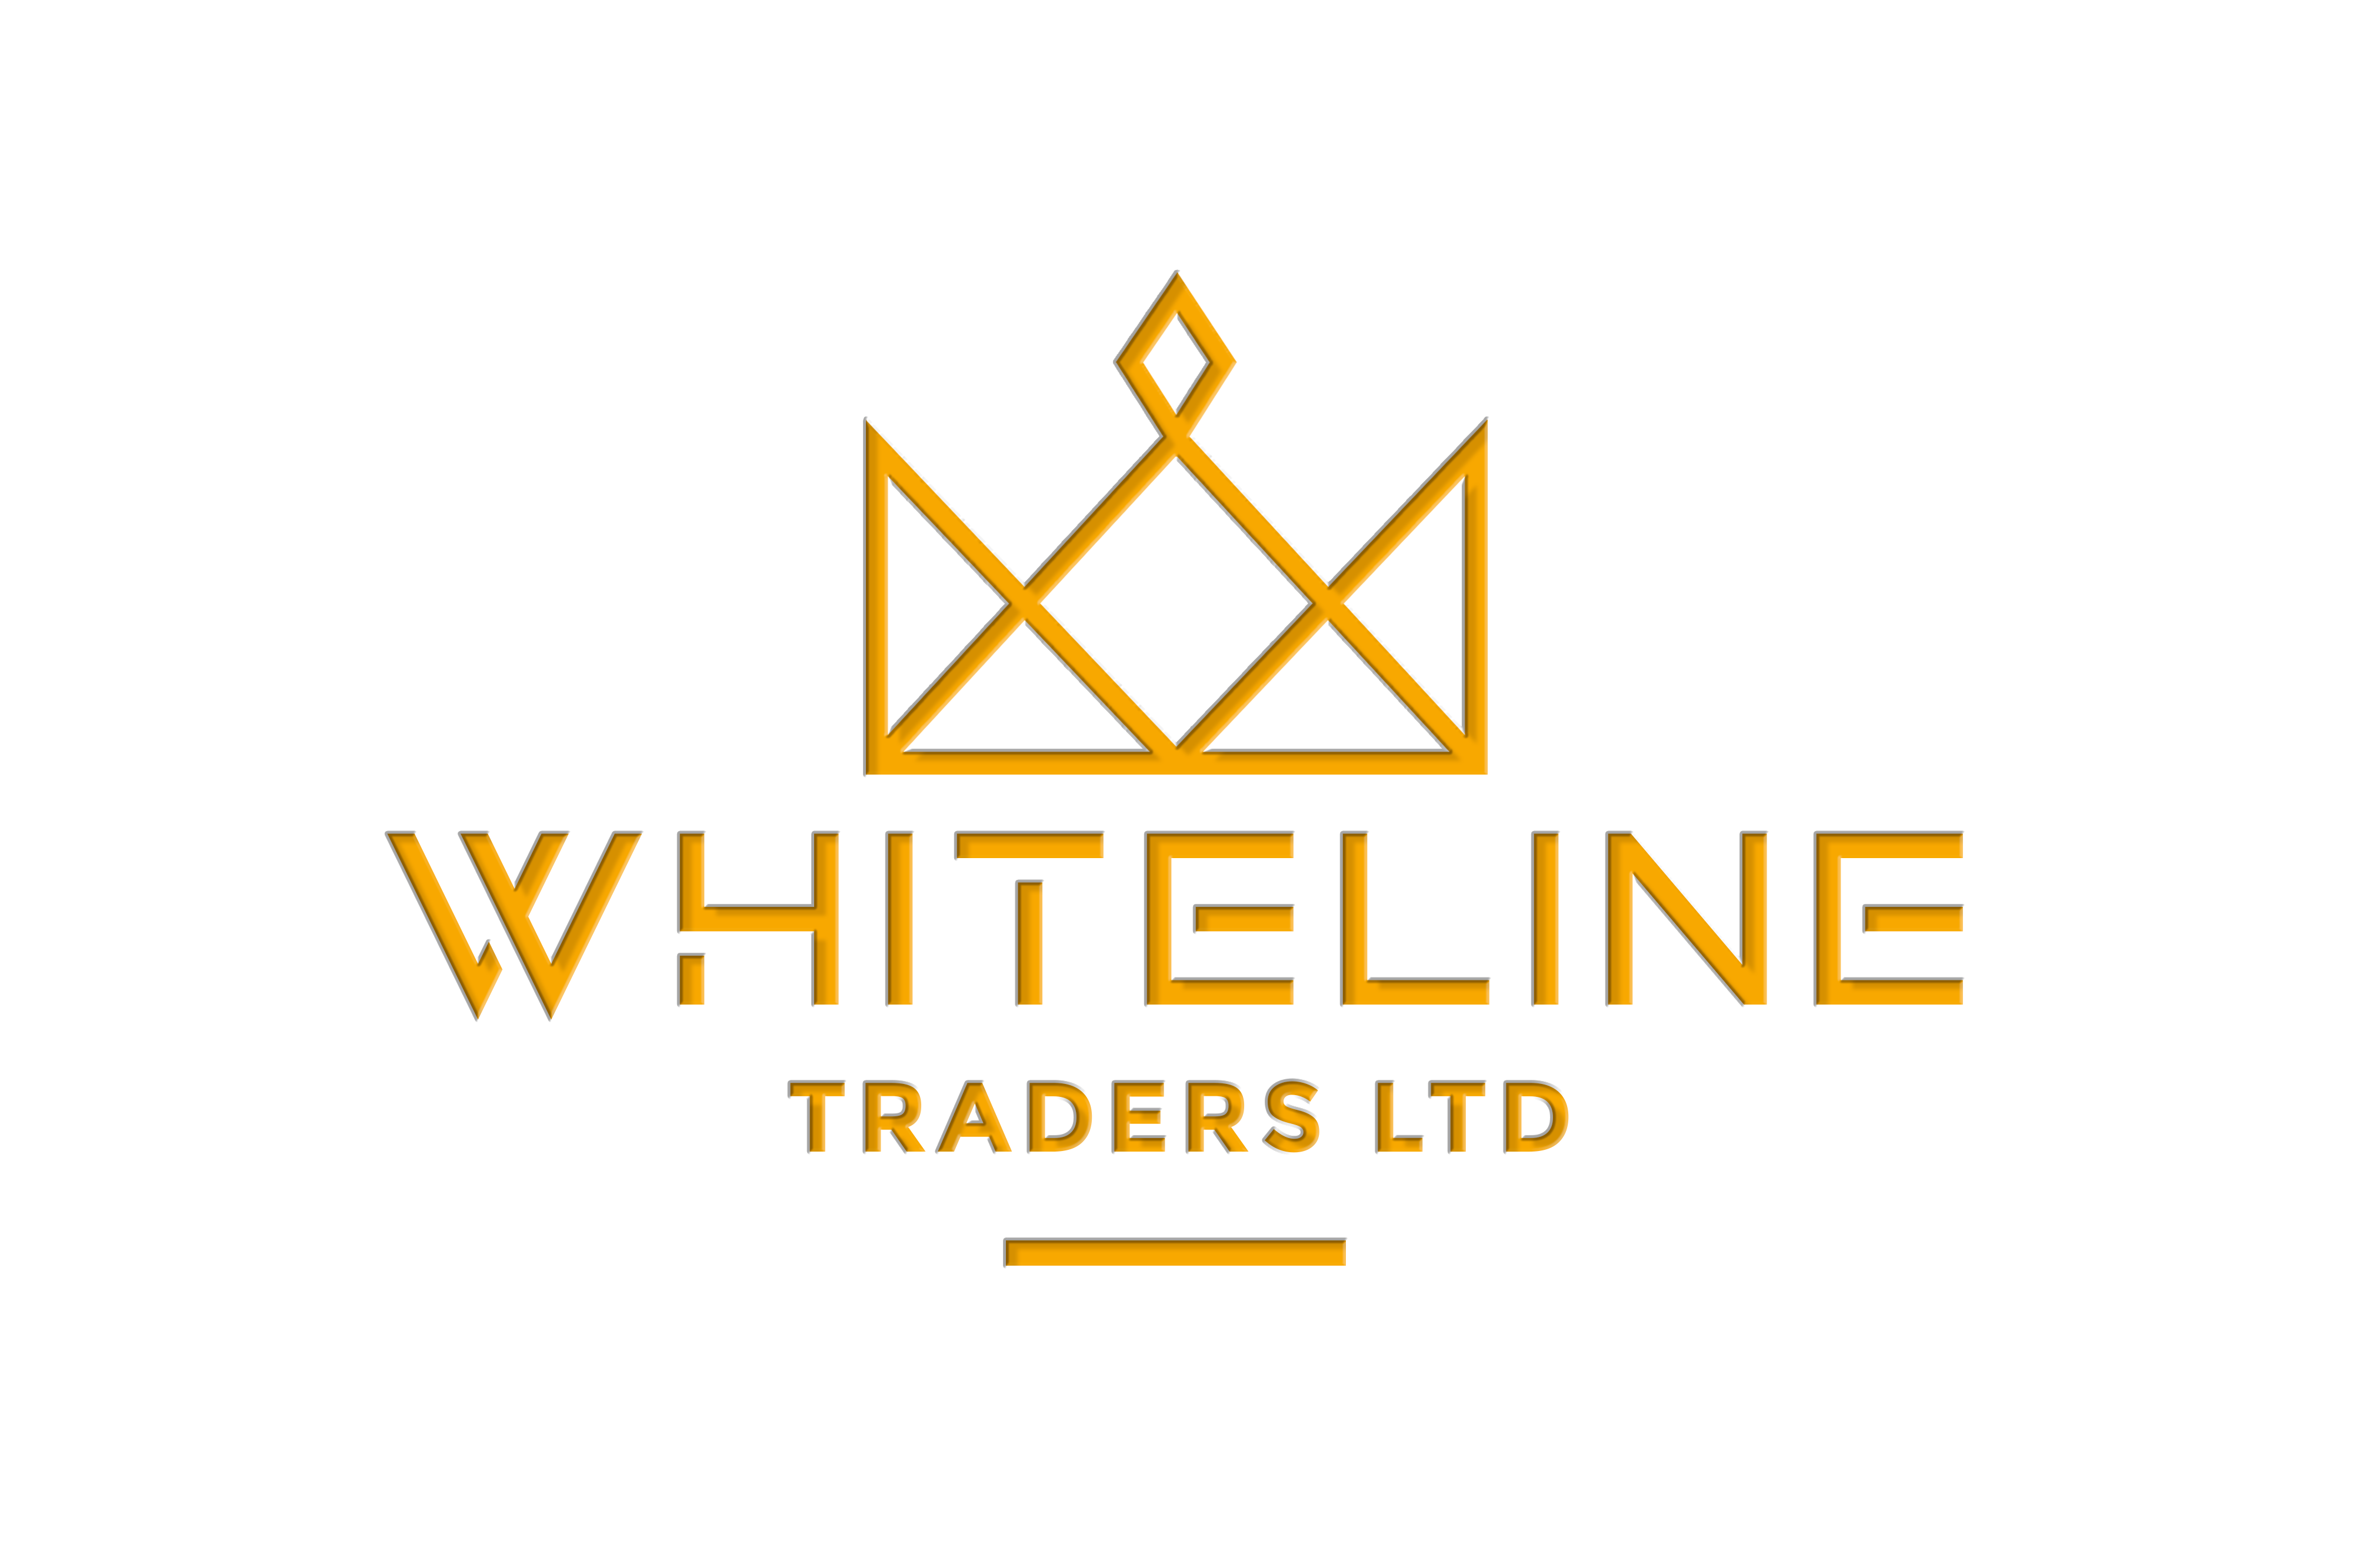 WhiteLine Traders